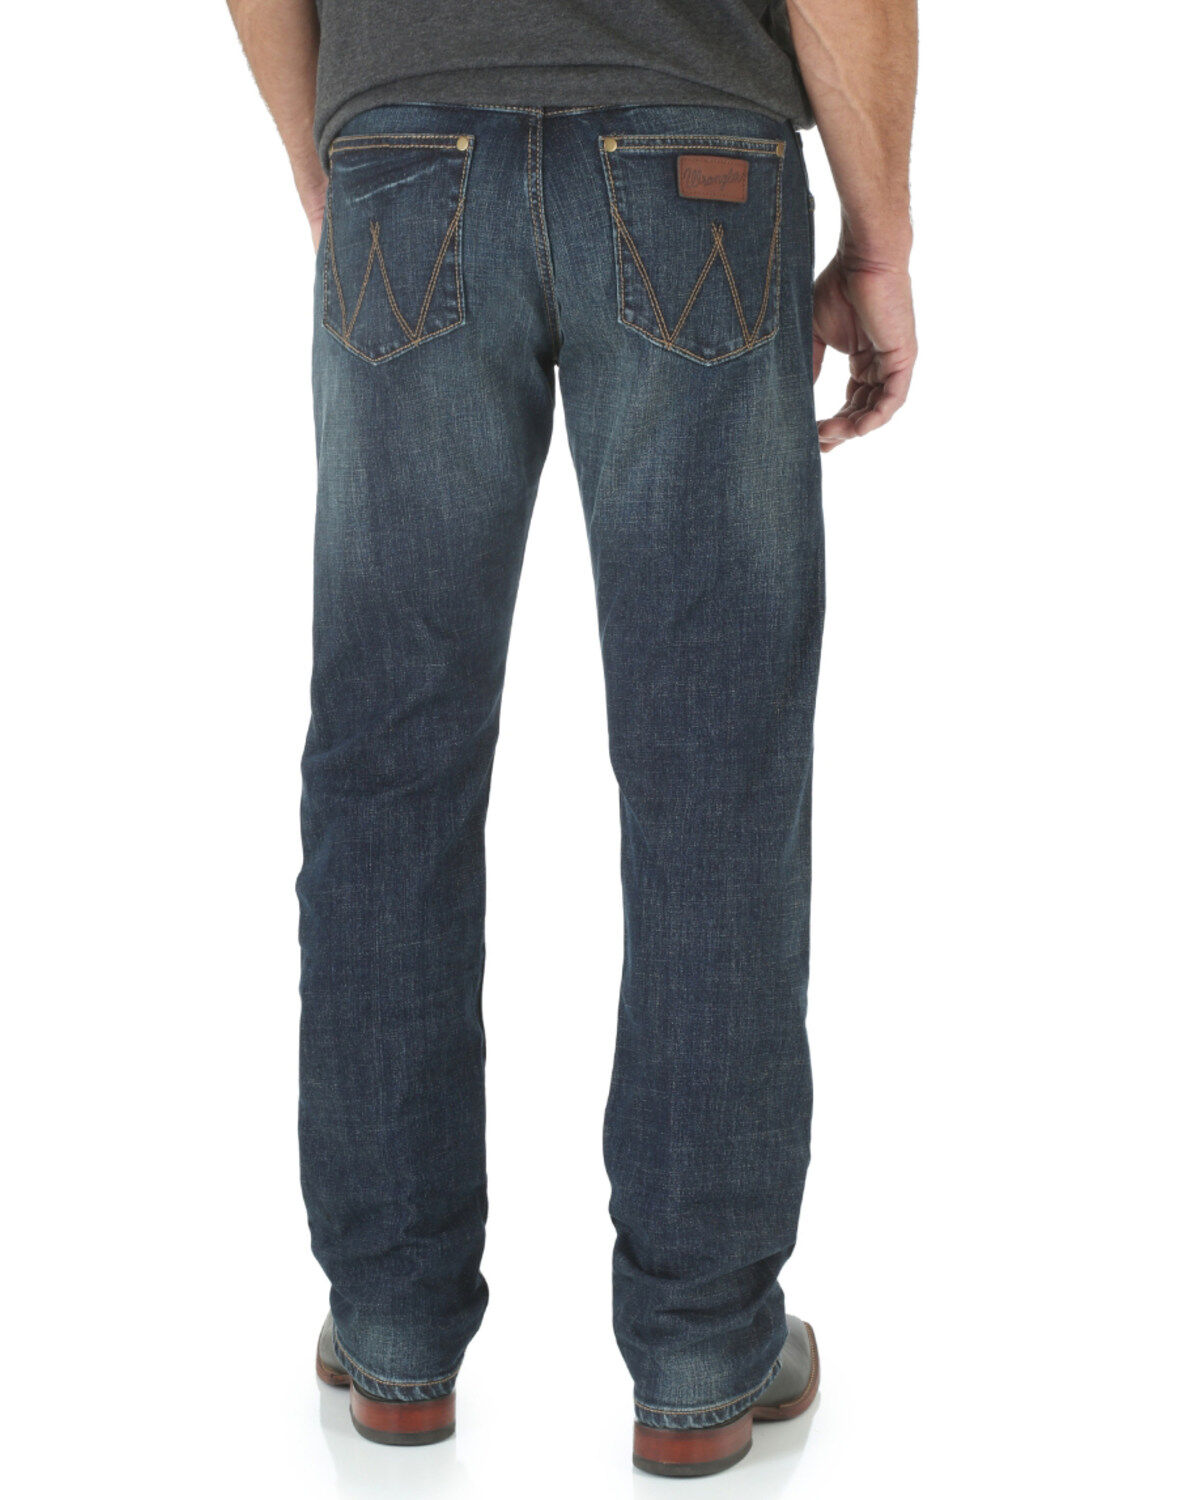 retro jeans outlet online